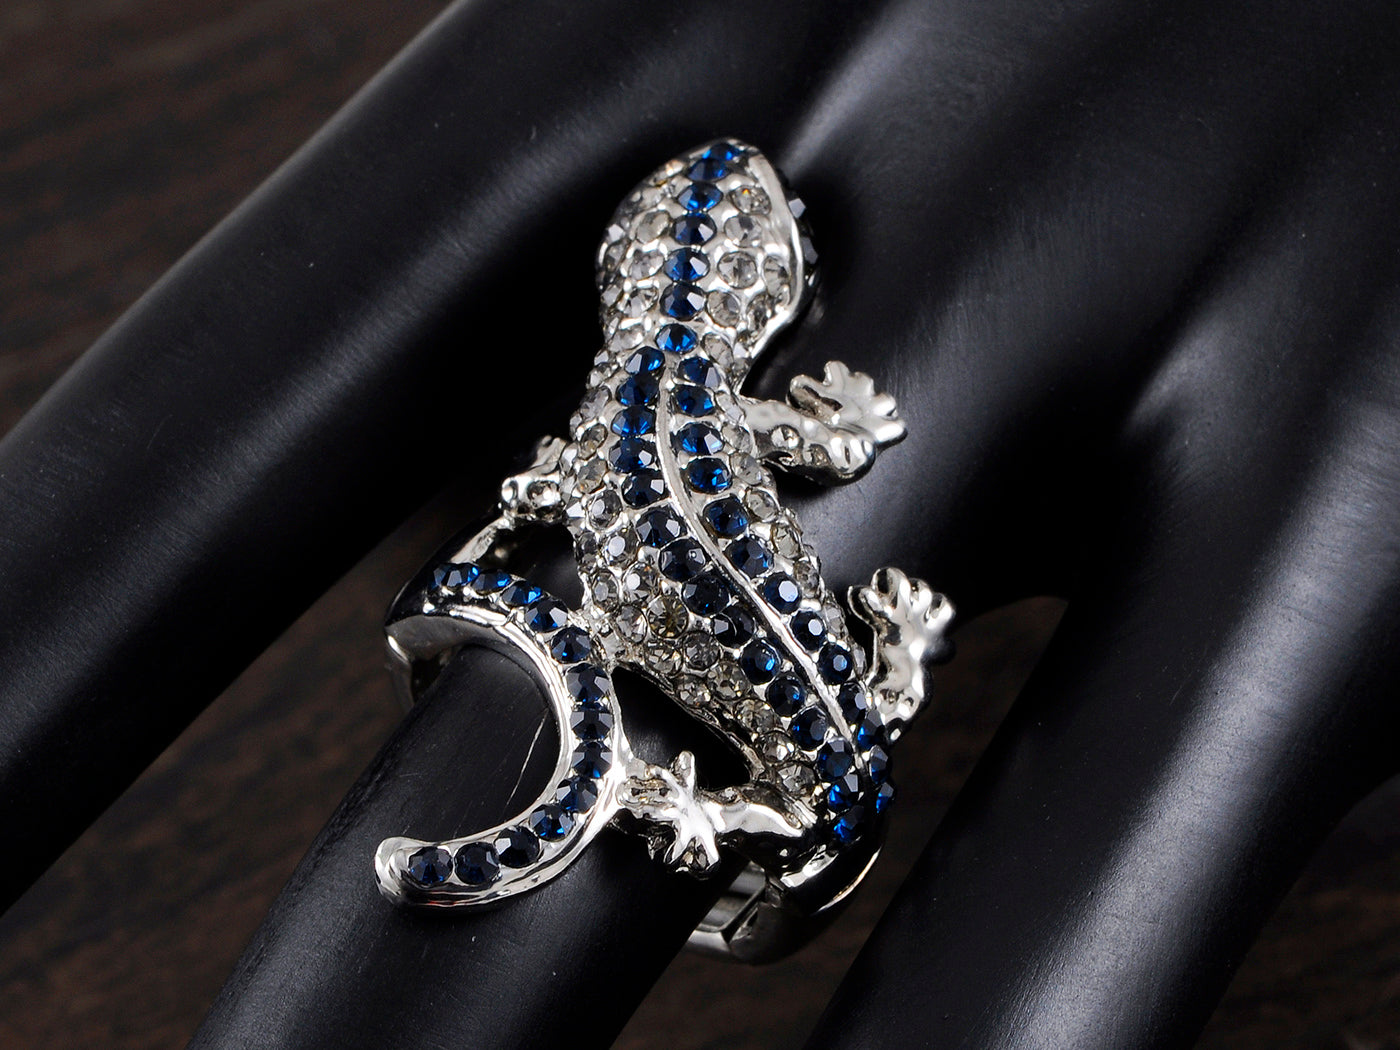 Dark Blue Lizard Reptile Ring